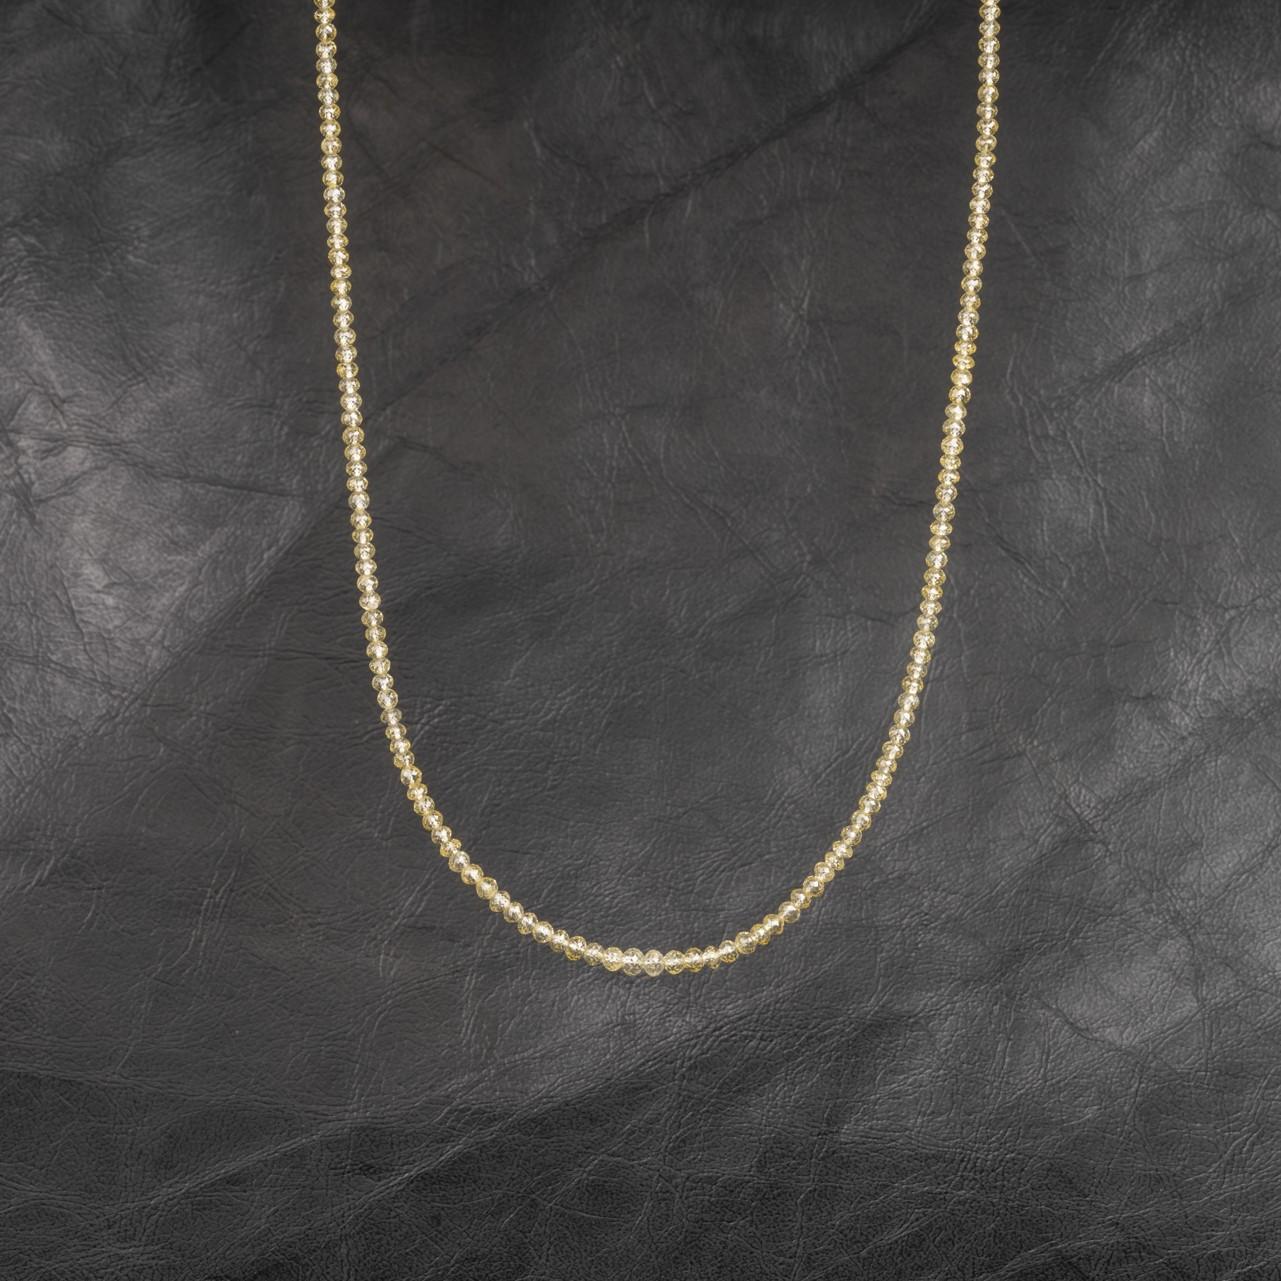 Bead 23.83 Carat Yellow Diamond Necklace with a White Diamond Clasp